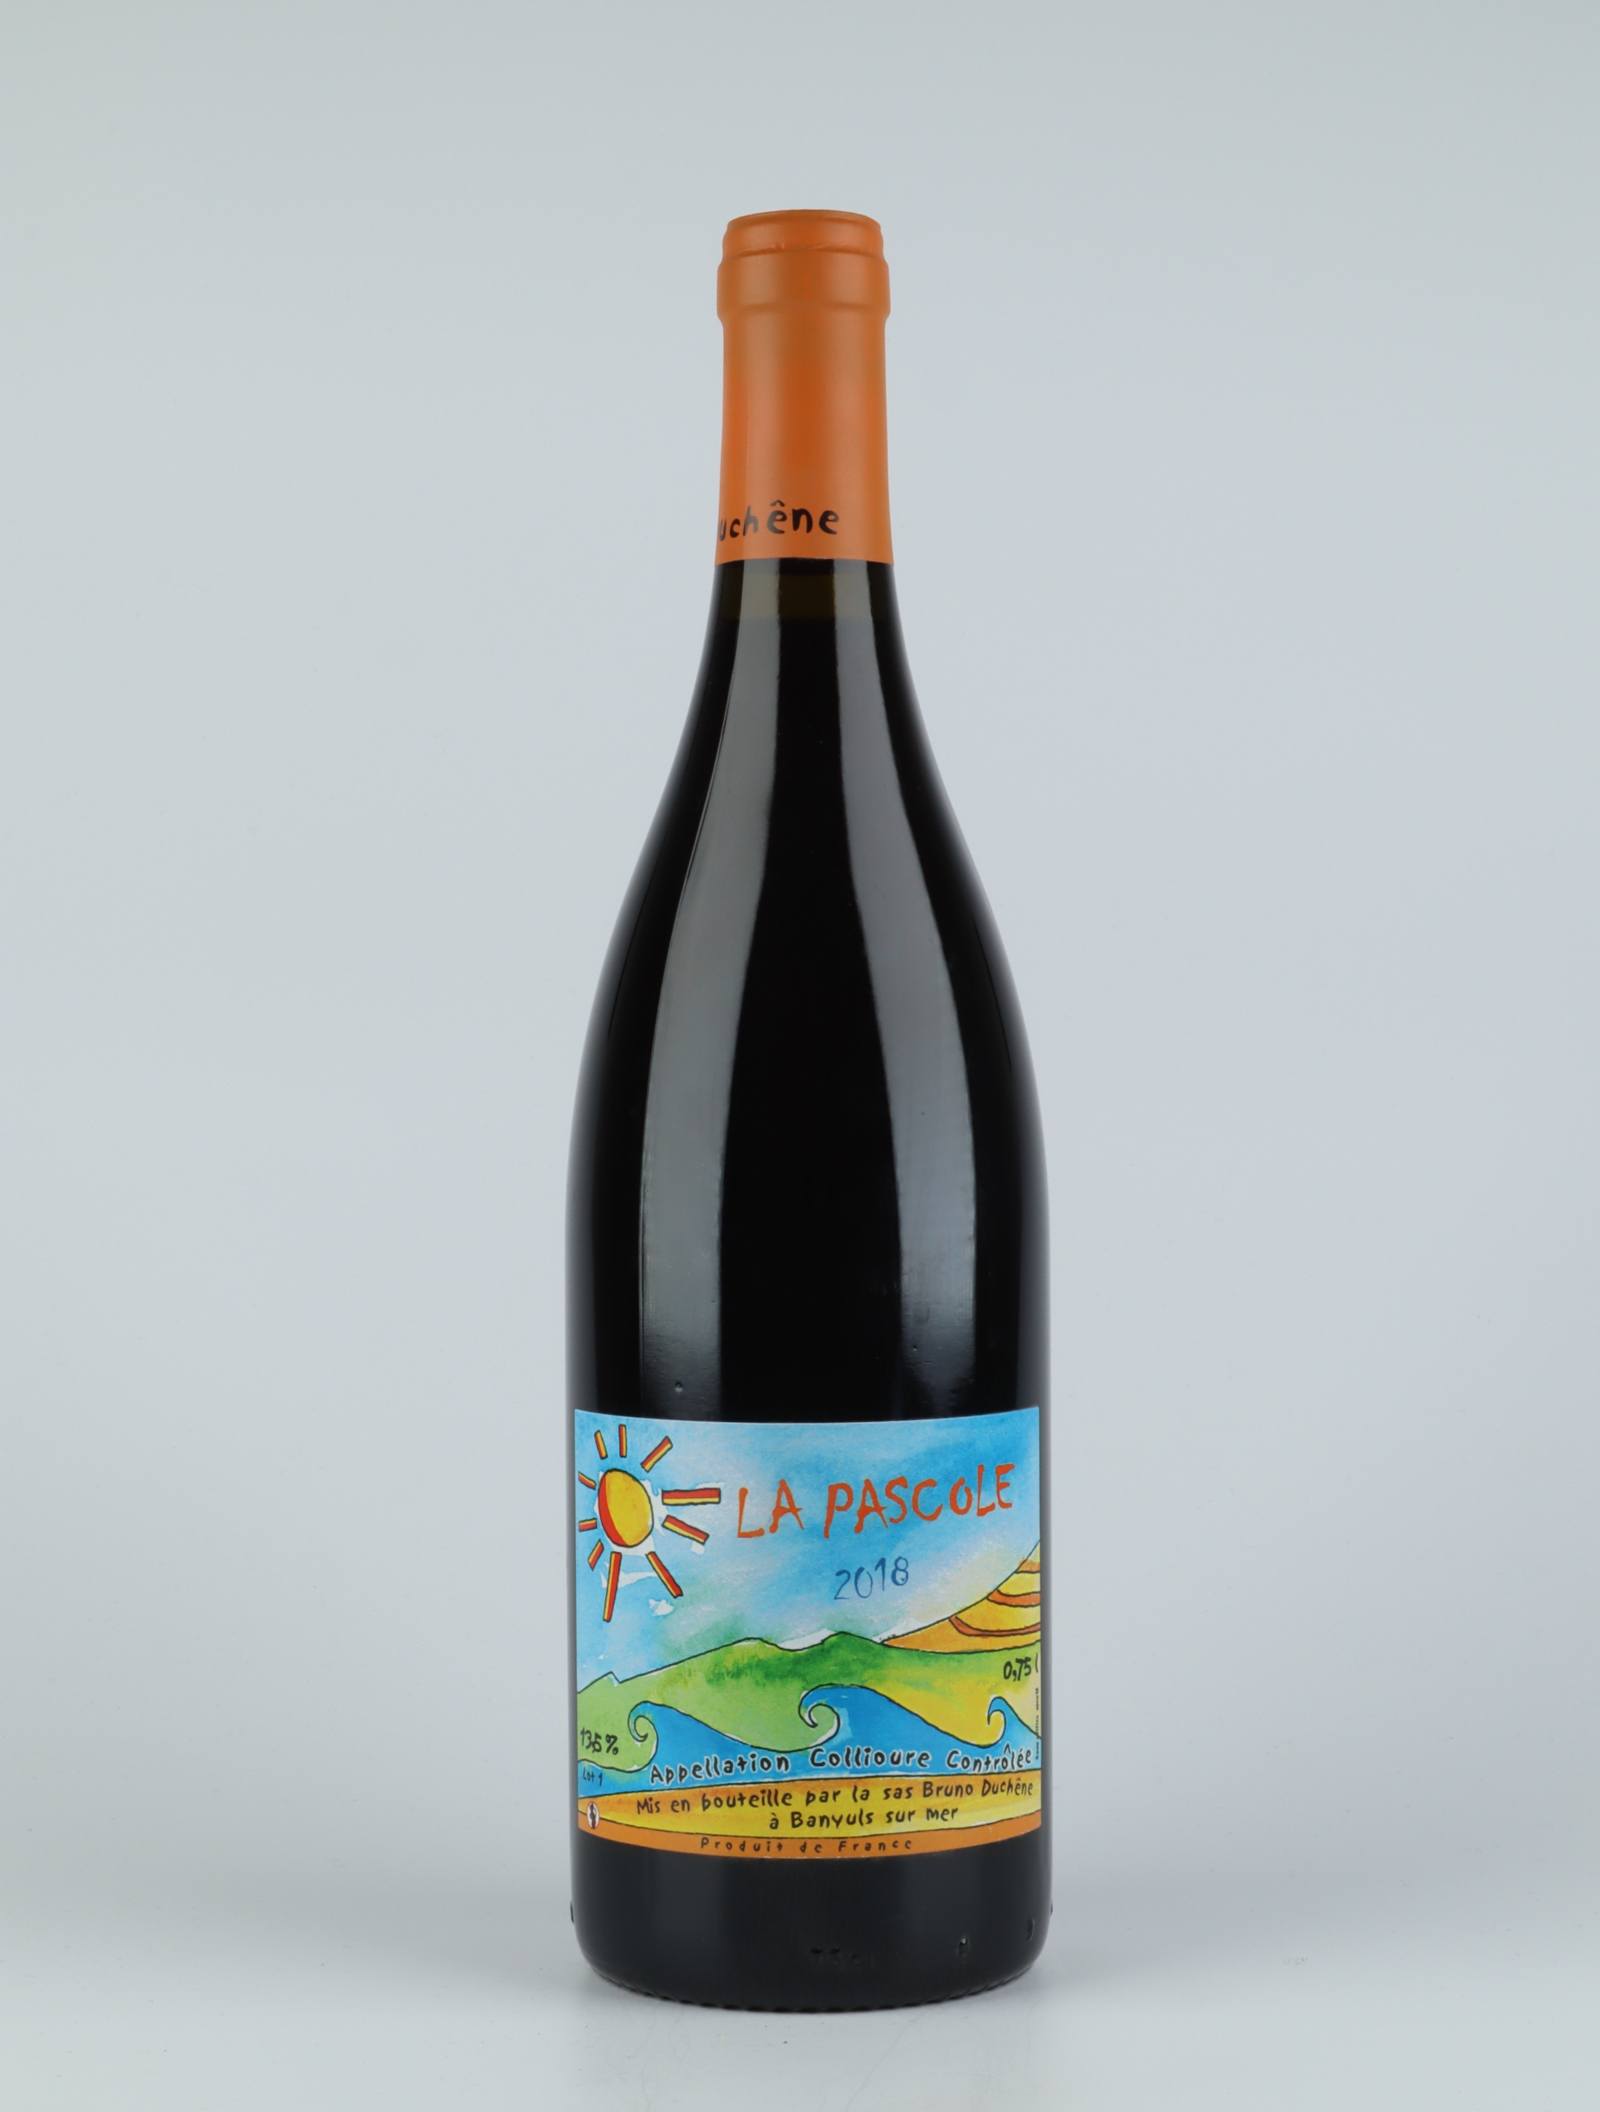 A bottle 2018 La Pascole Red wine from Bruno Duchêne, Rousillon in France